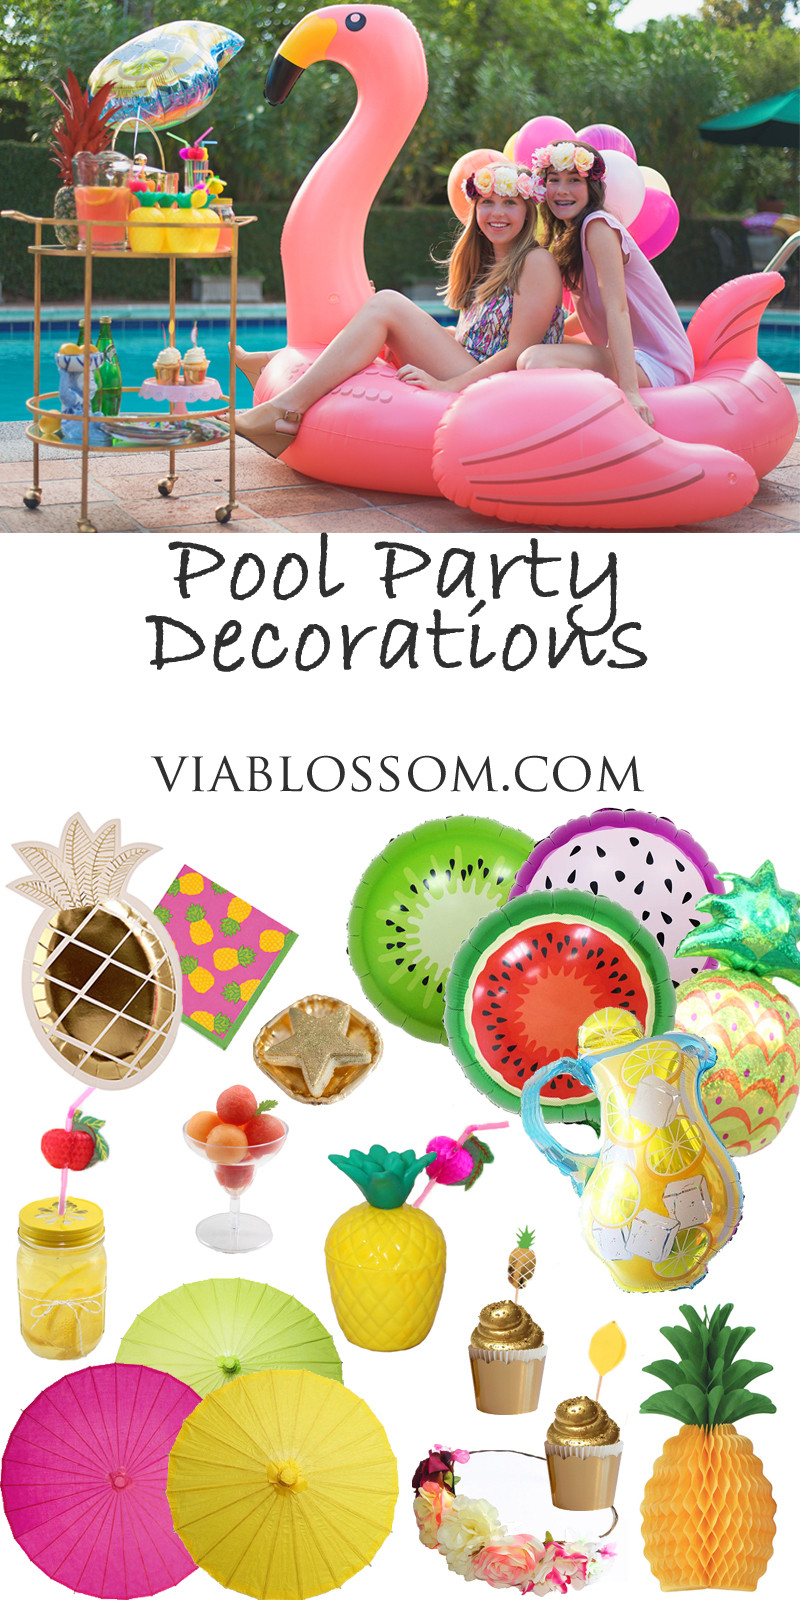 Pool Bday Party Ideas
 Pool Party Ideas Via Blossom